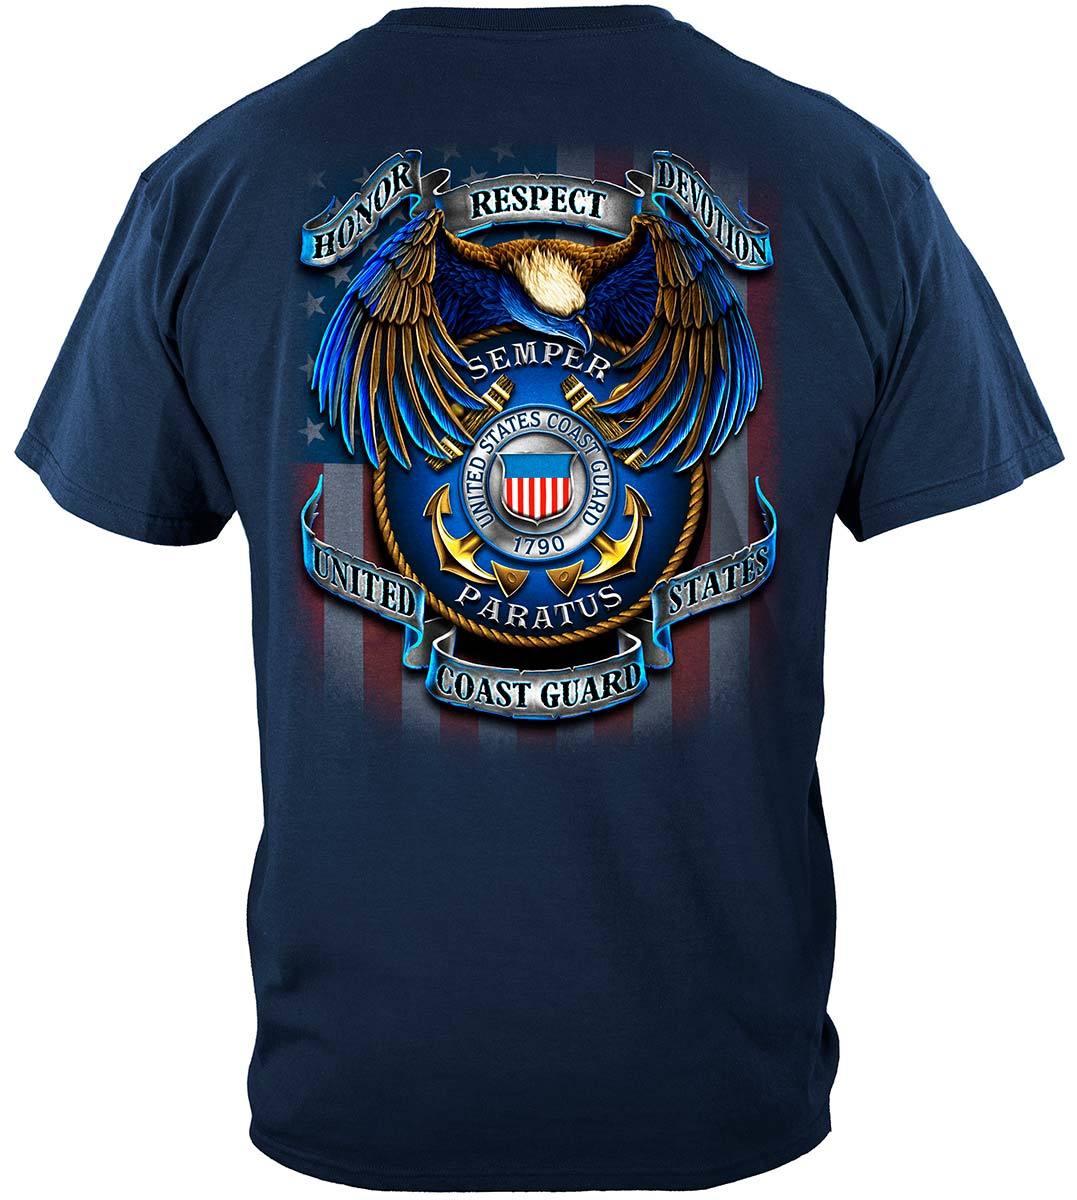 True Heroes Coast Guard Premium Hooded Sweat Shirt